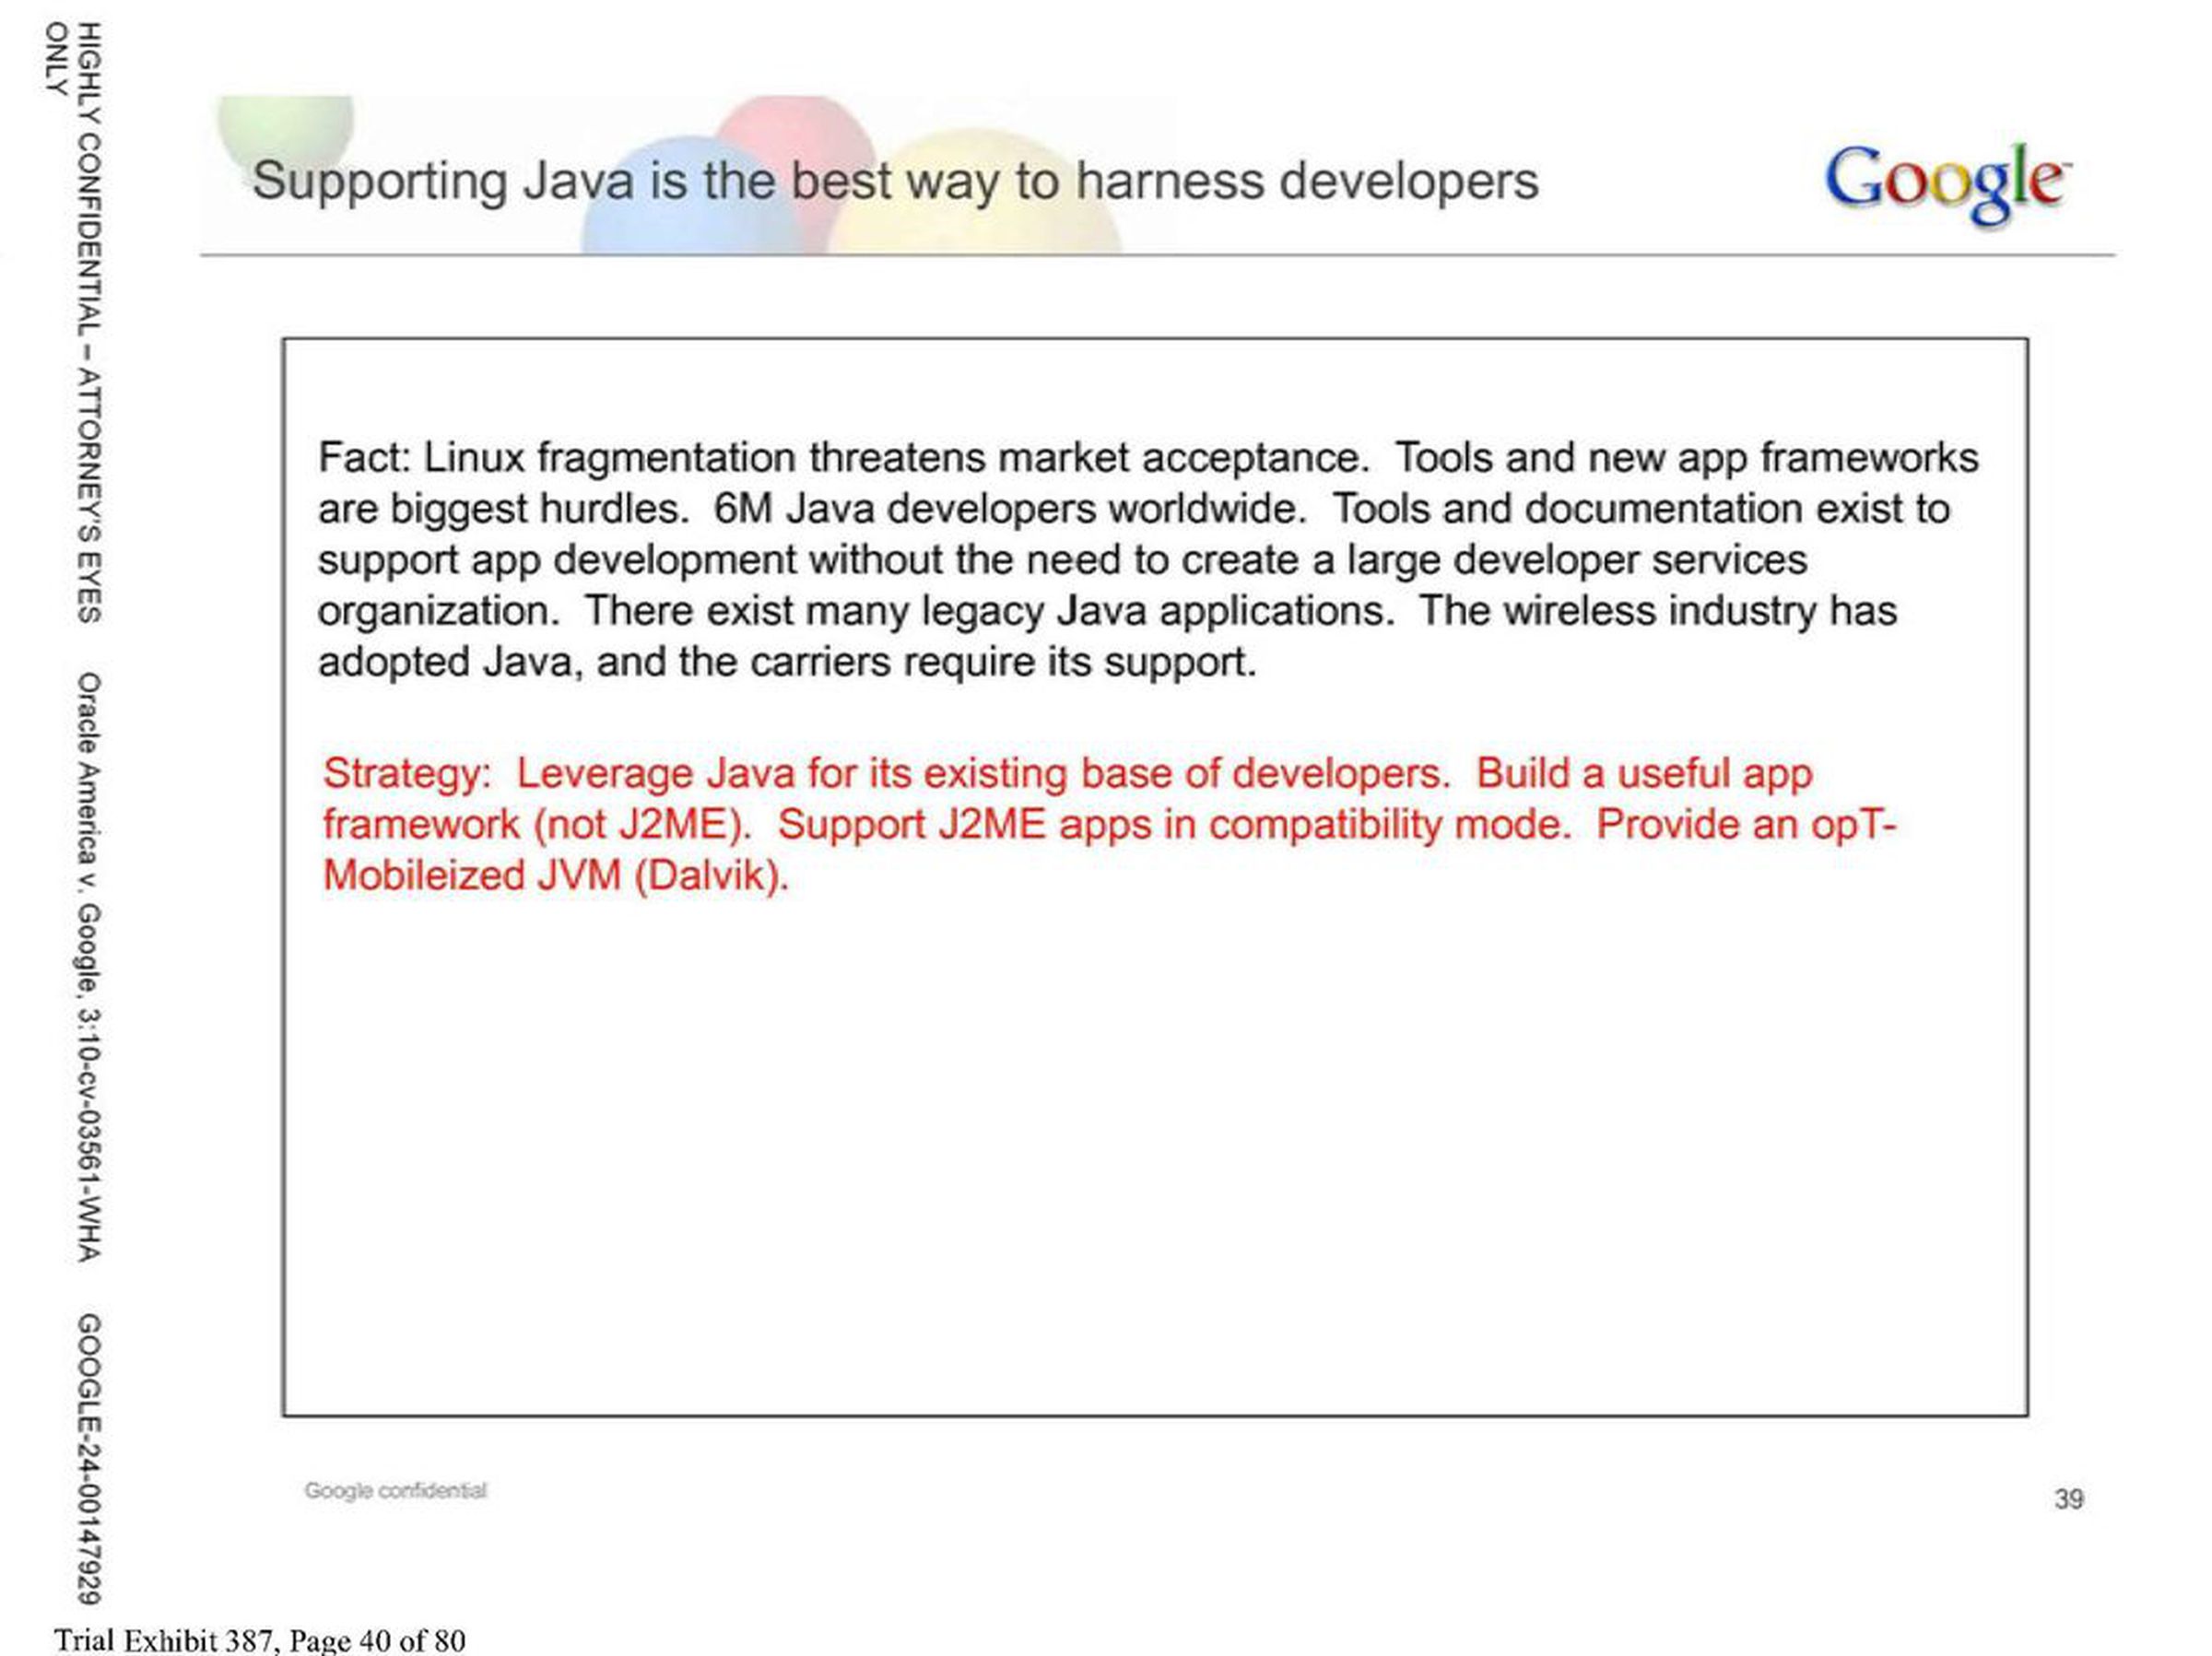 Google's slides sent to T-Mobile in November 2006